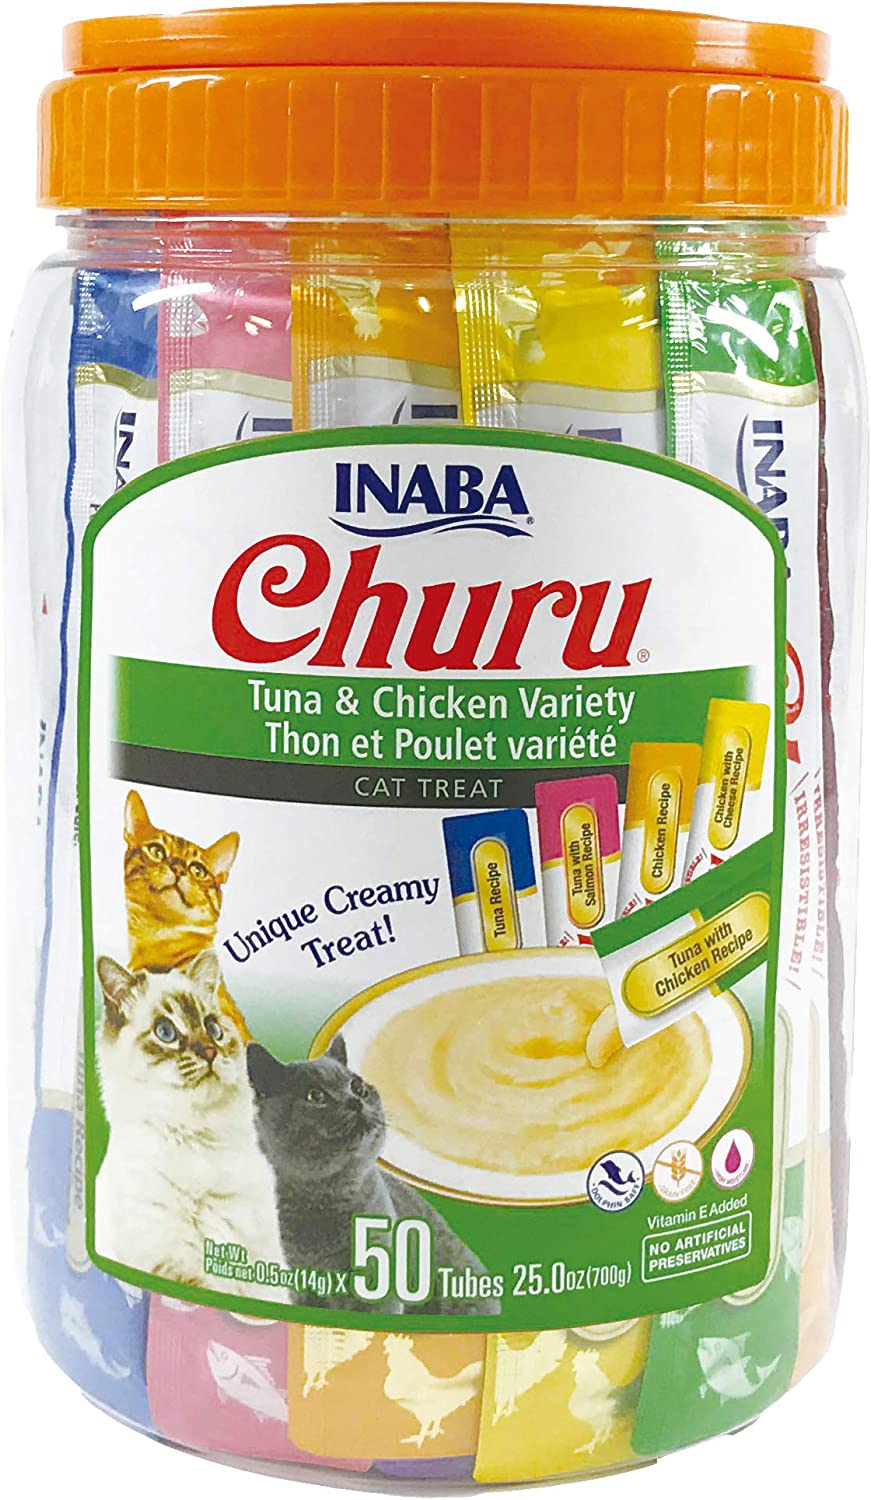 INABA Churu Lickable Creamy Purée Cat Treats